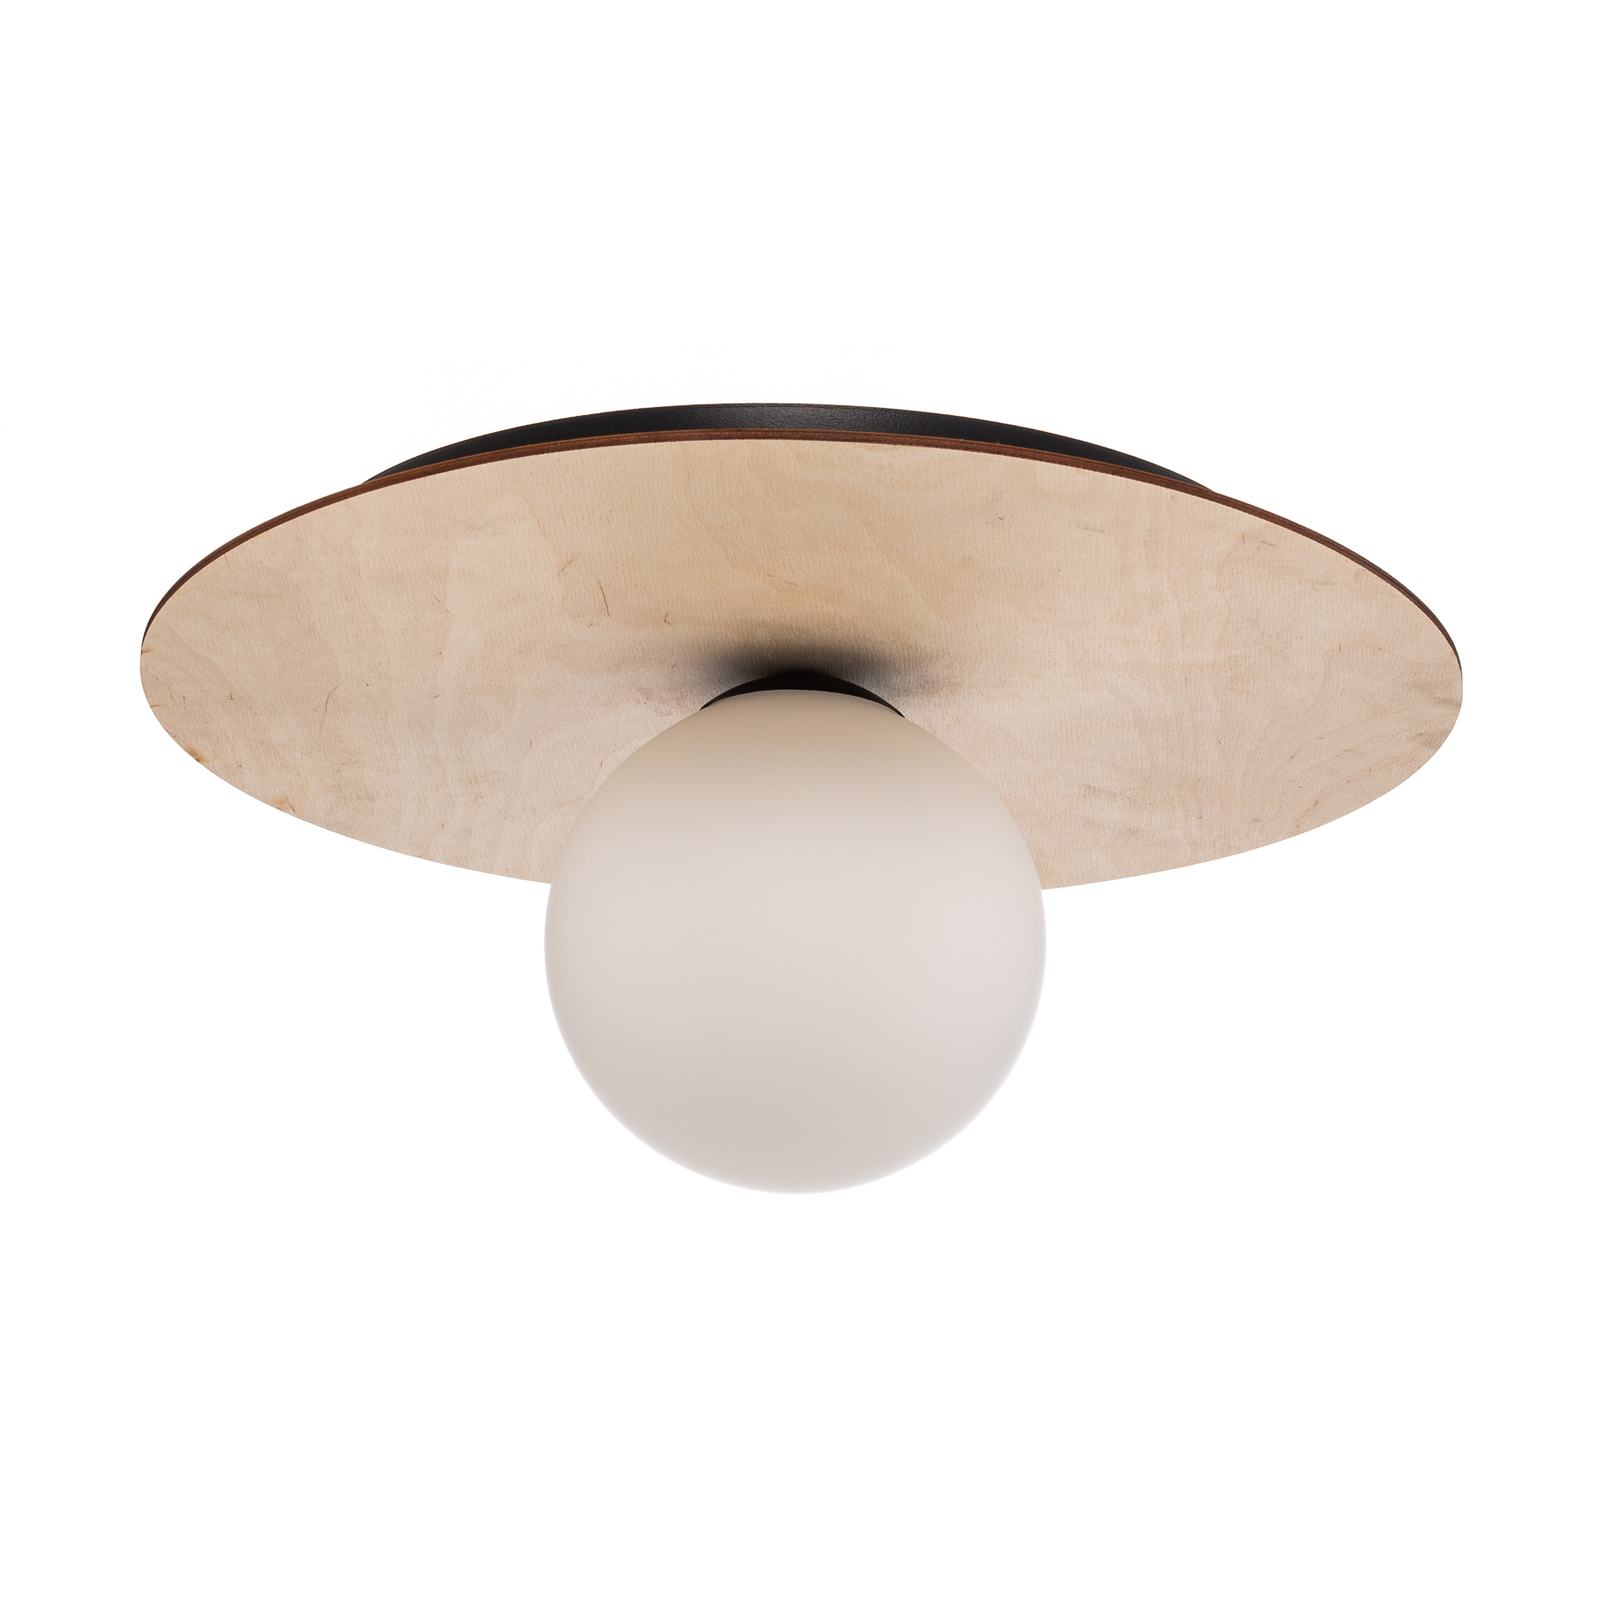 Kenzo ceiling light, round, brown/white, 1-bulb